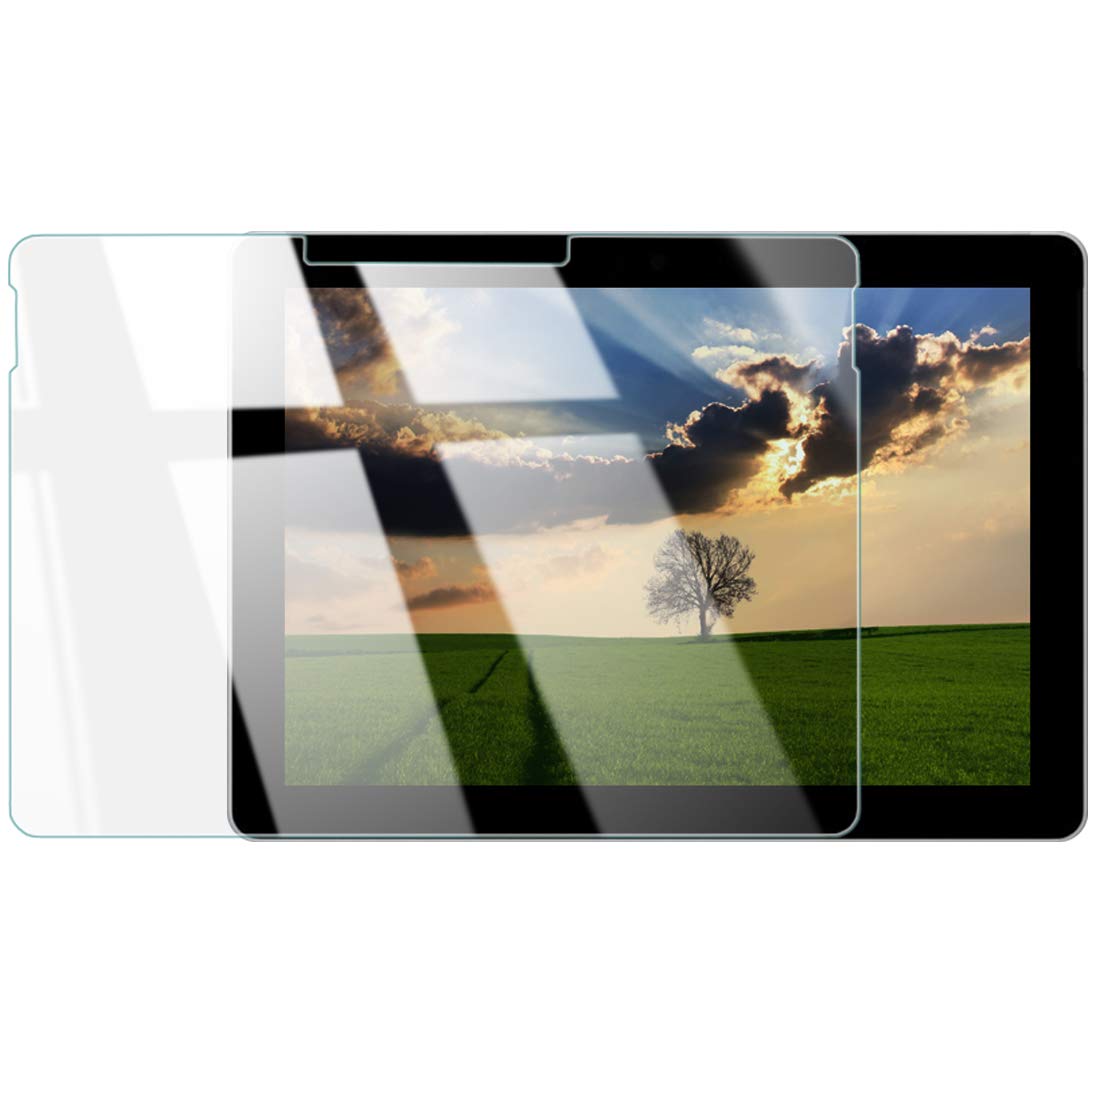 【Surface Go 10インチ対応】日本メーカー ガラスフィルム 全面保護 最高硬度 9H ケース干渉防止 強化ガラス 液晶保護フィルム 高透過率 気泡ゼロ 硬度9H SurfaceGo 透明1 - WANLOK.com ワンロック公式サイト